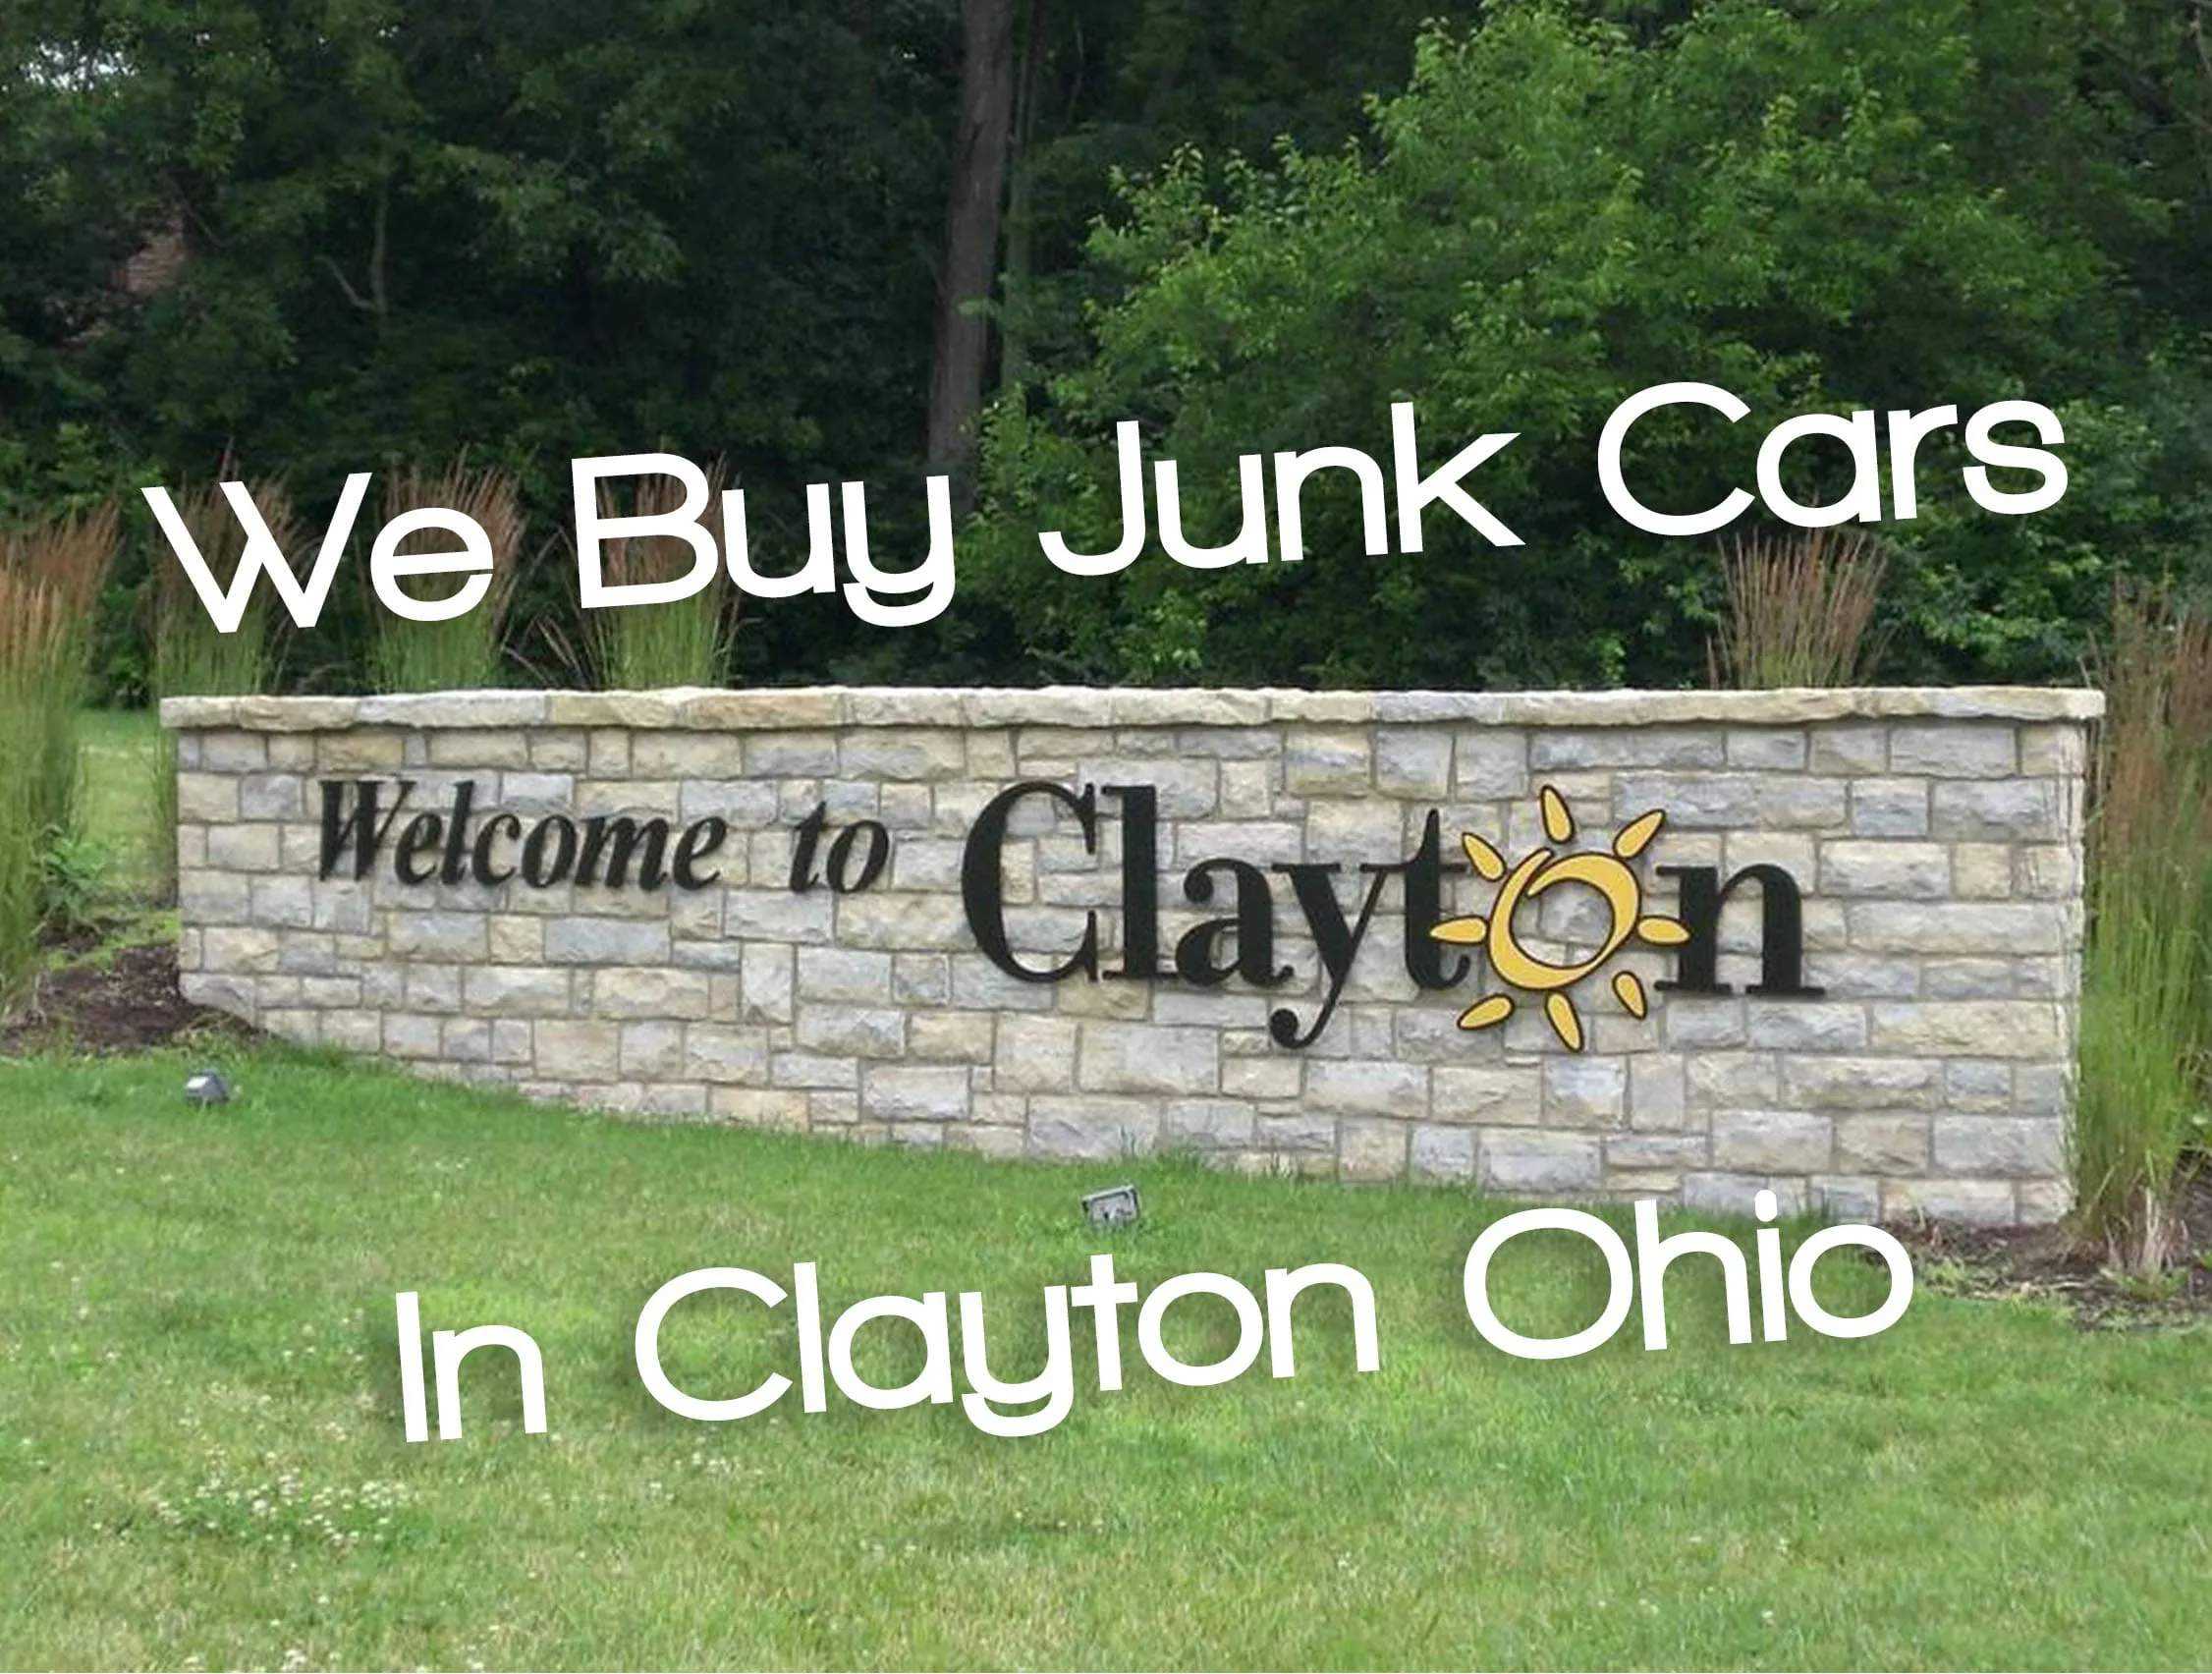 We Buy Junk Cars in Clayton Ohio